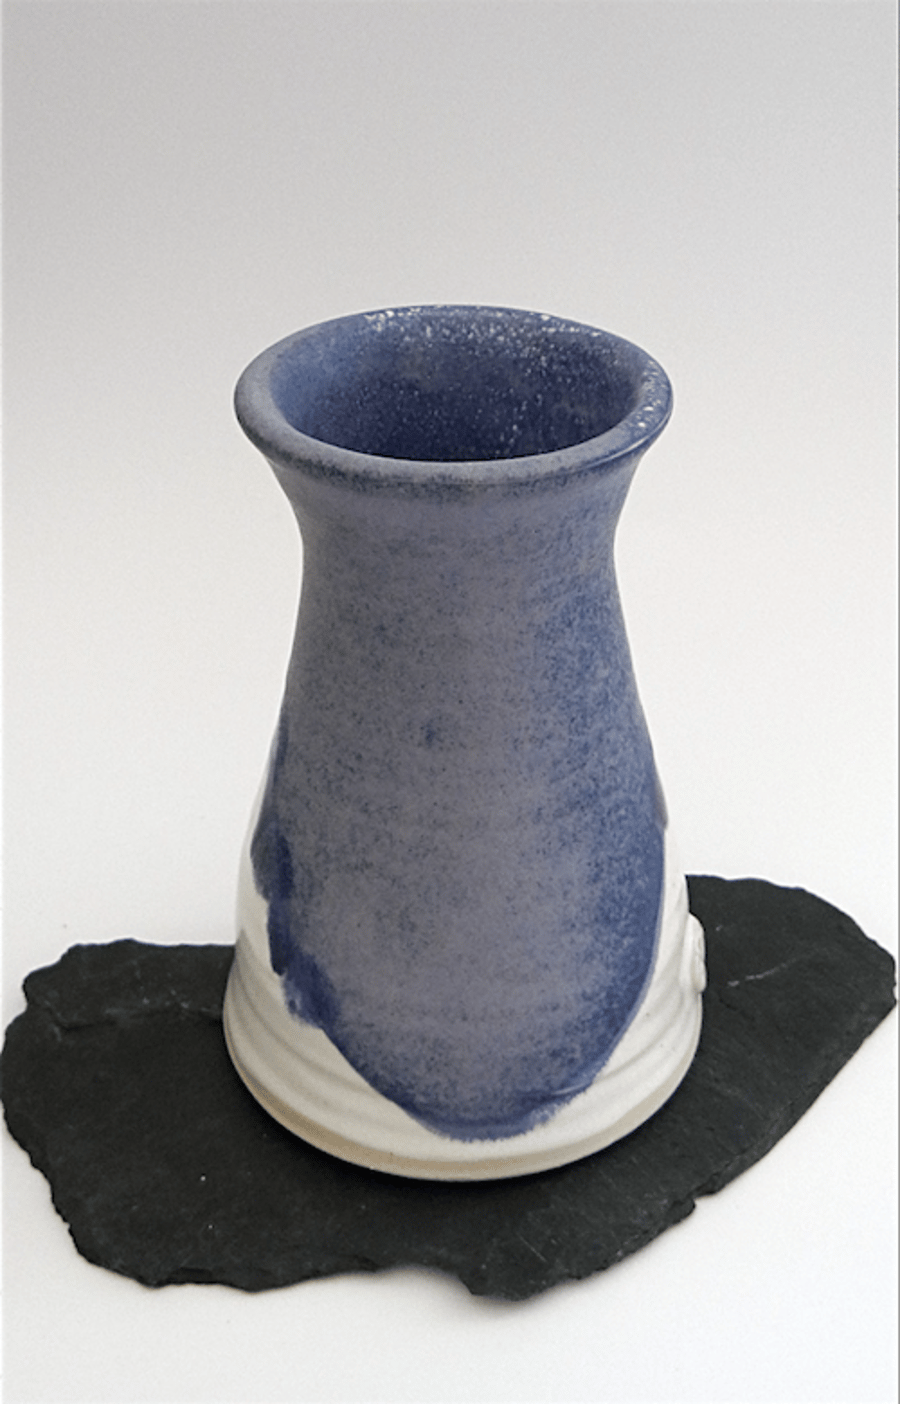 Ceramic vase in shades of mauve, sky blue and cream - handmade pottery